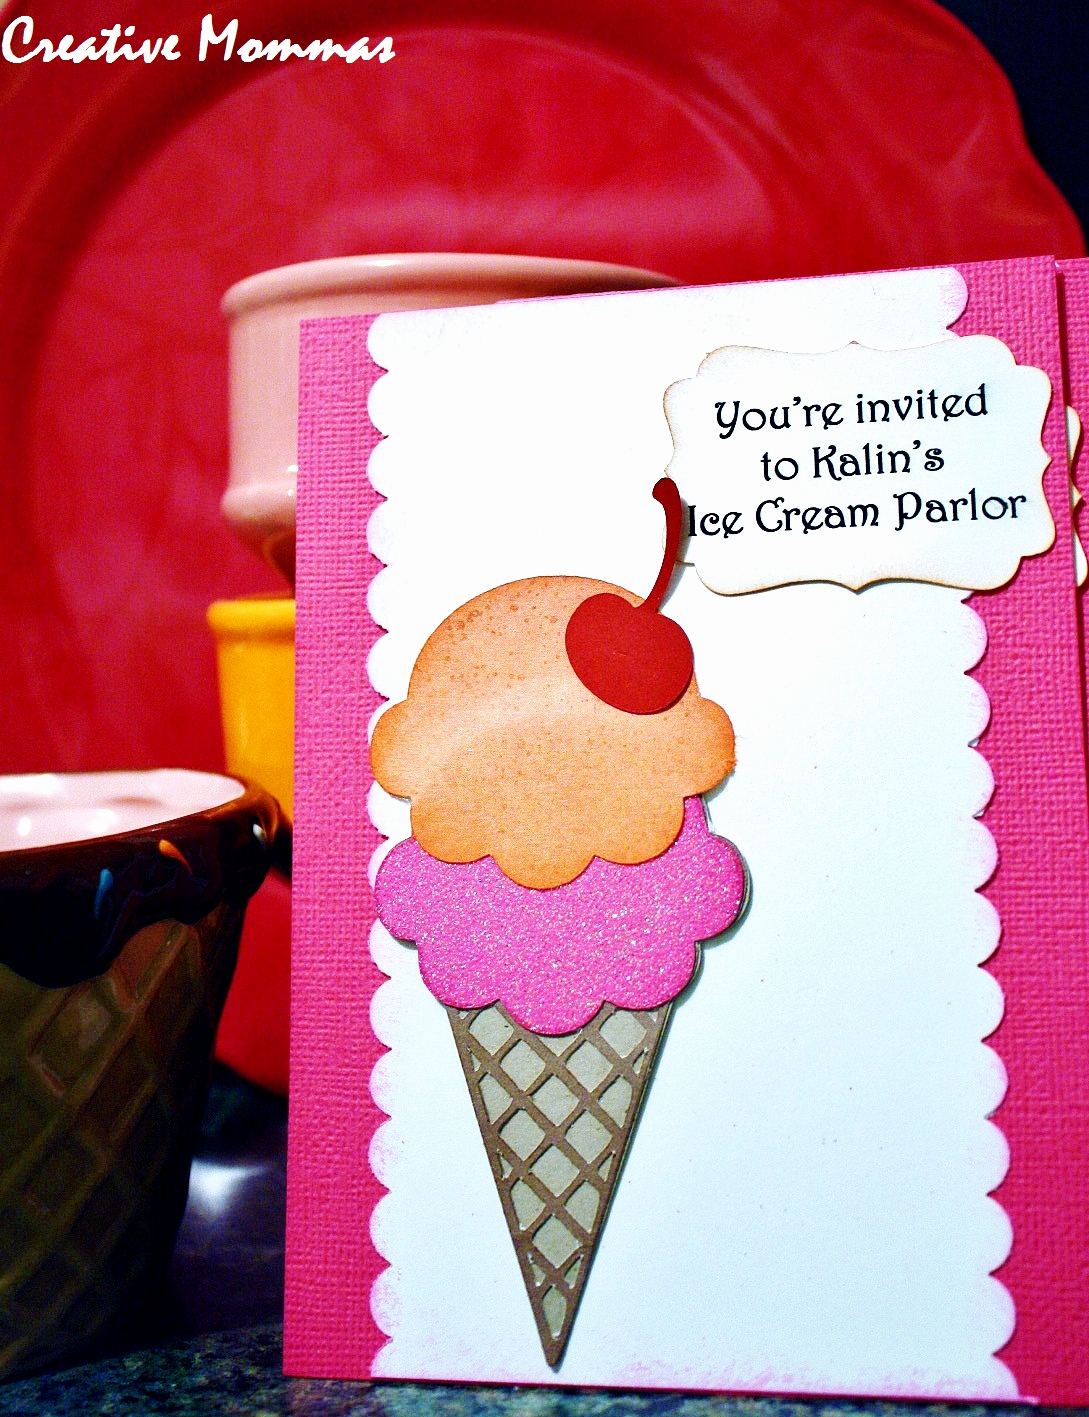 Ice Cream Party Invitation Awesome Creative Mommas Ice Cream Parlor Party Invitations